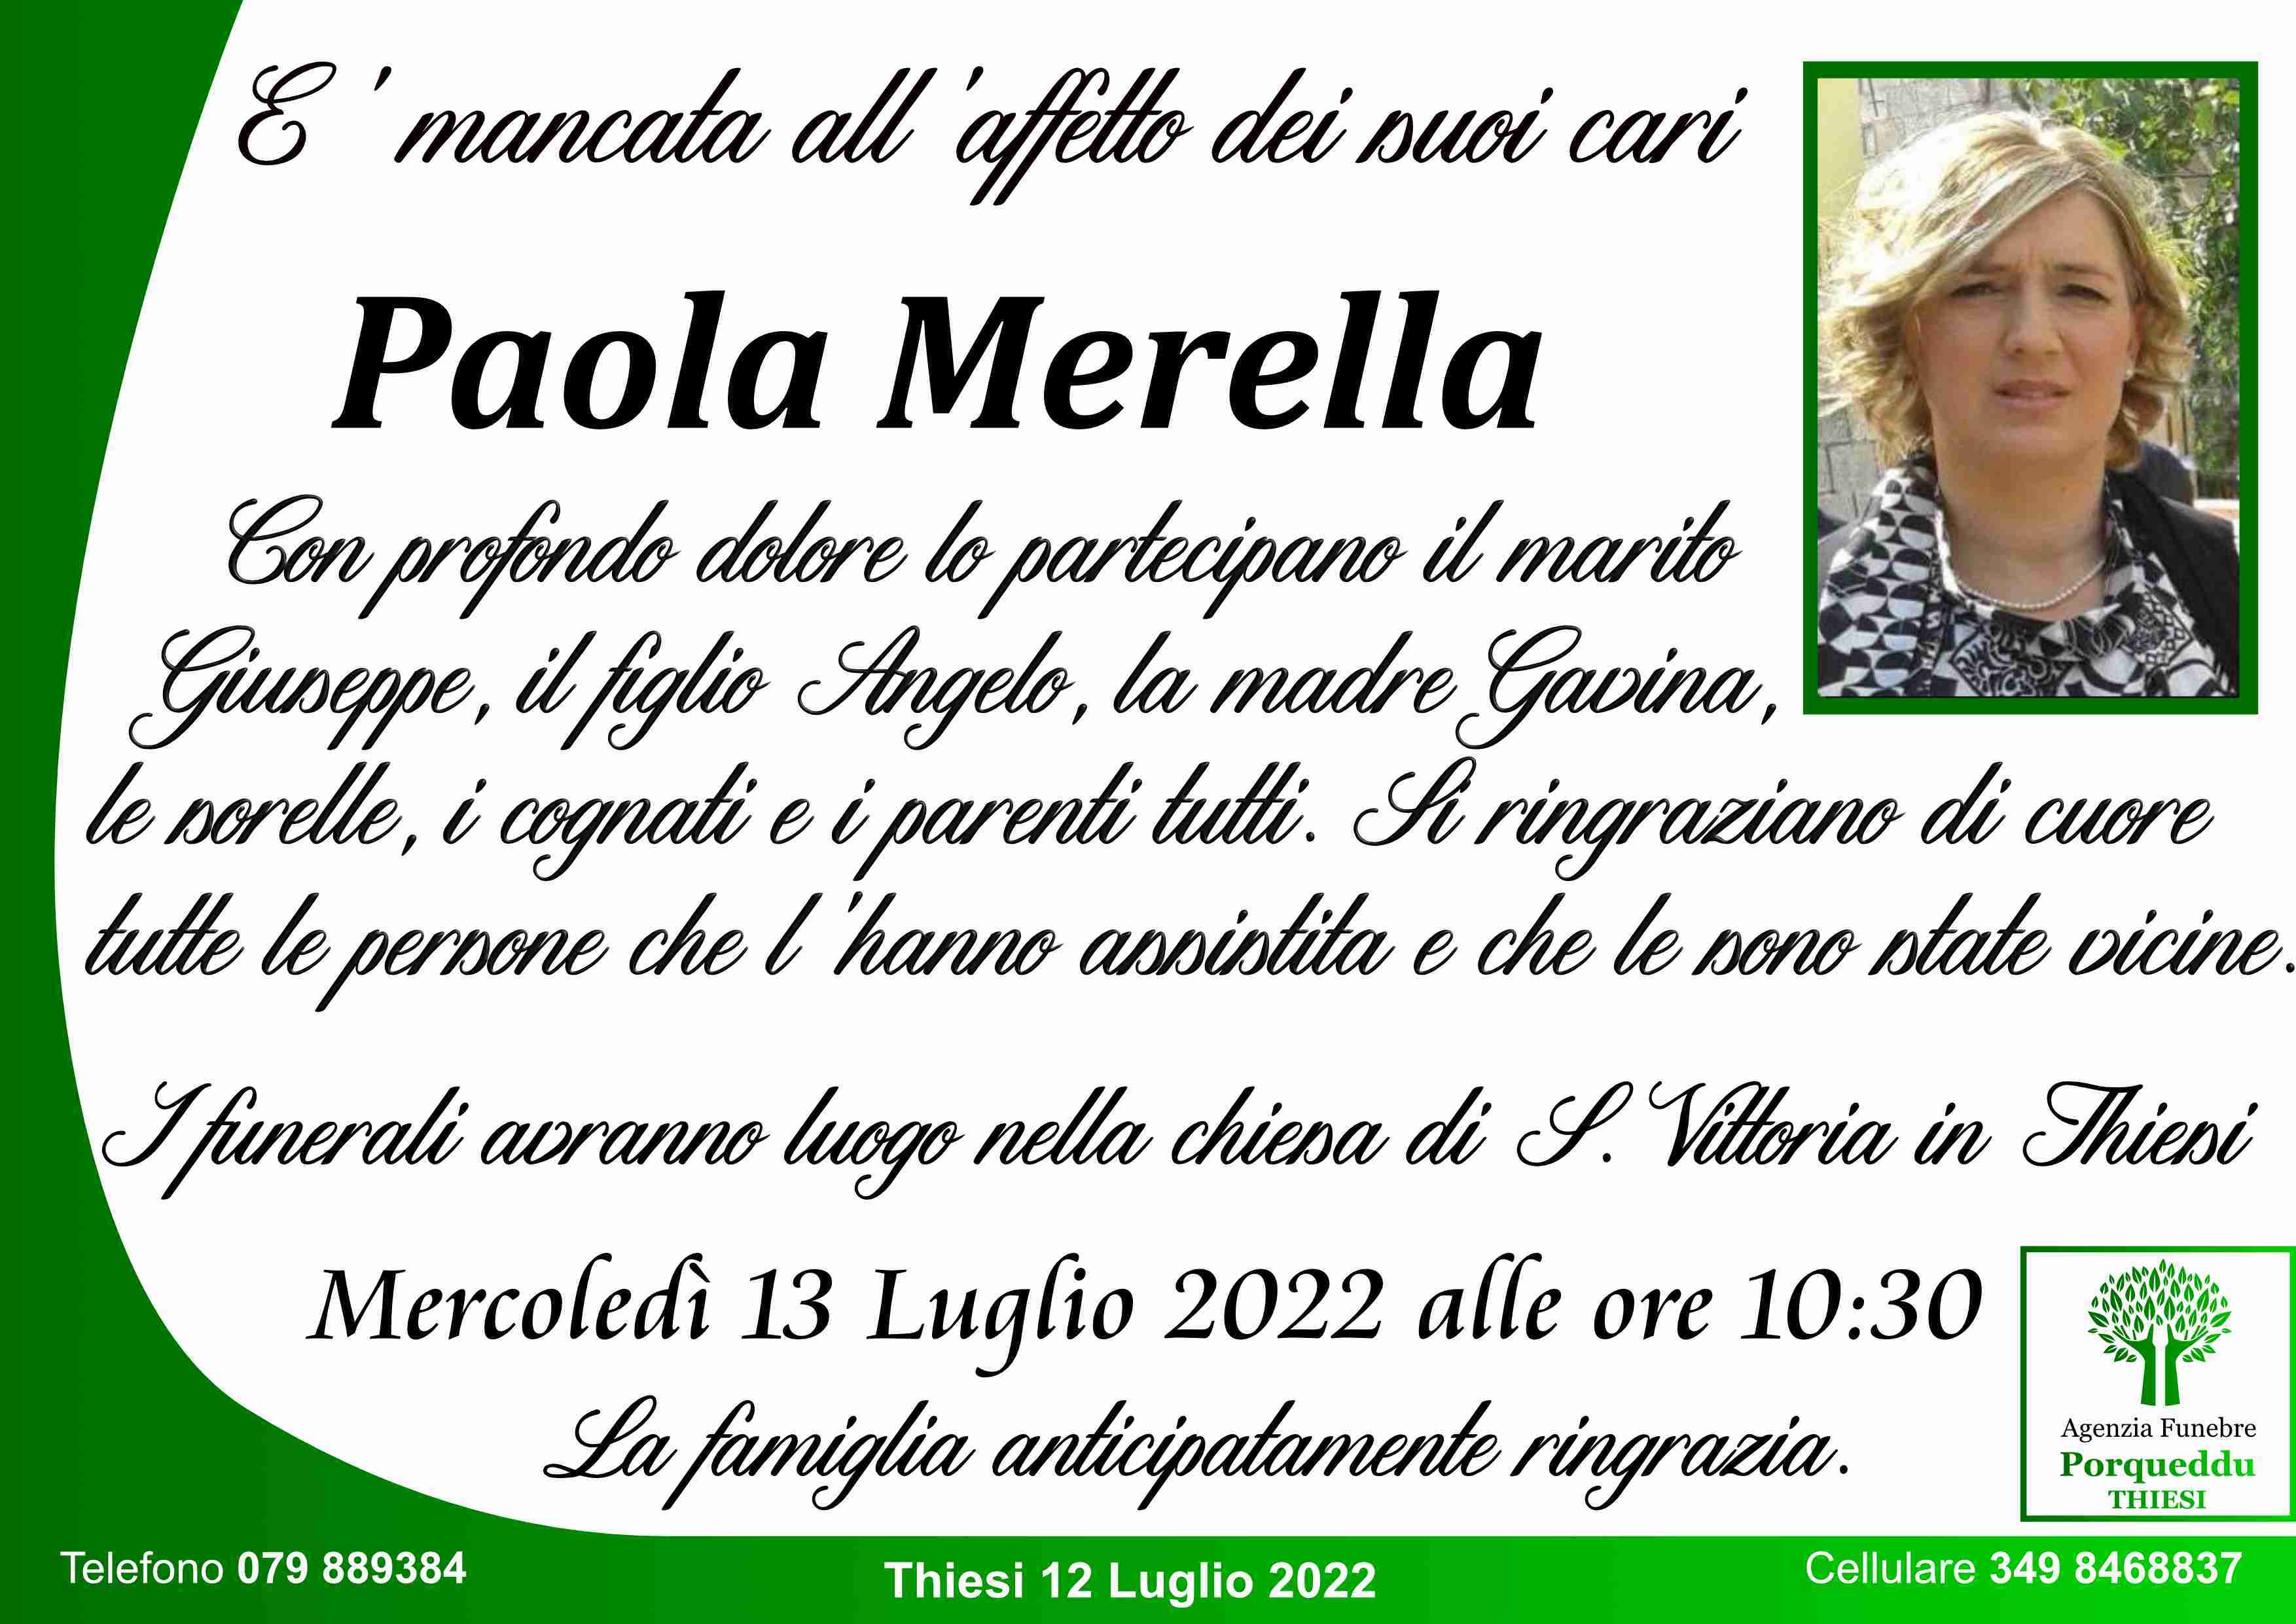 Paola Merella